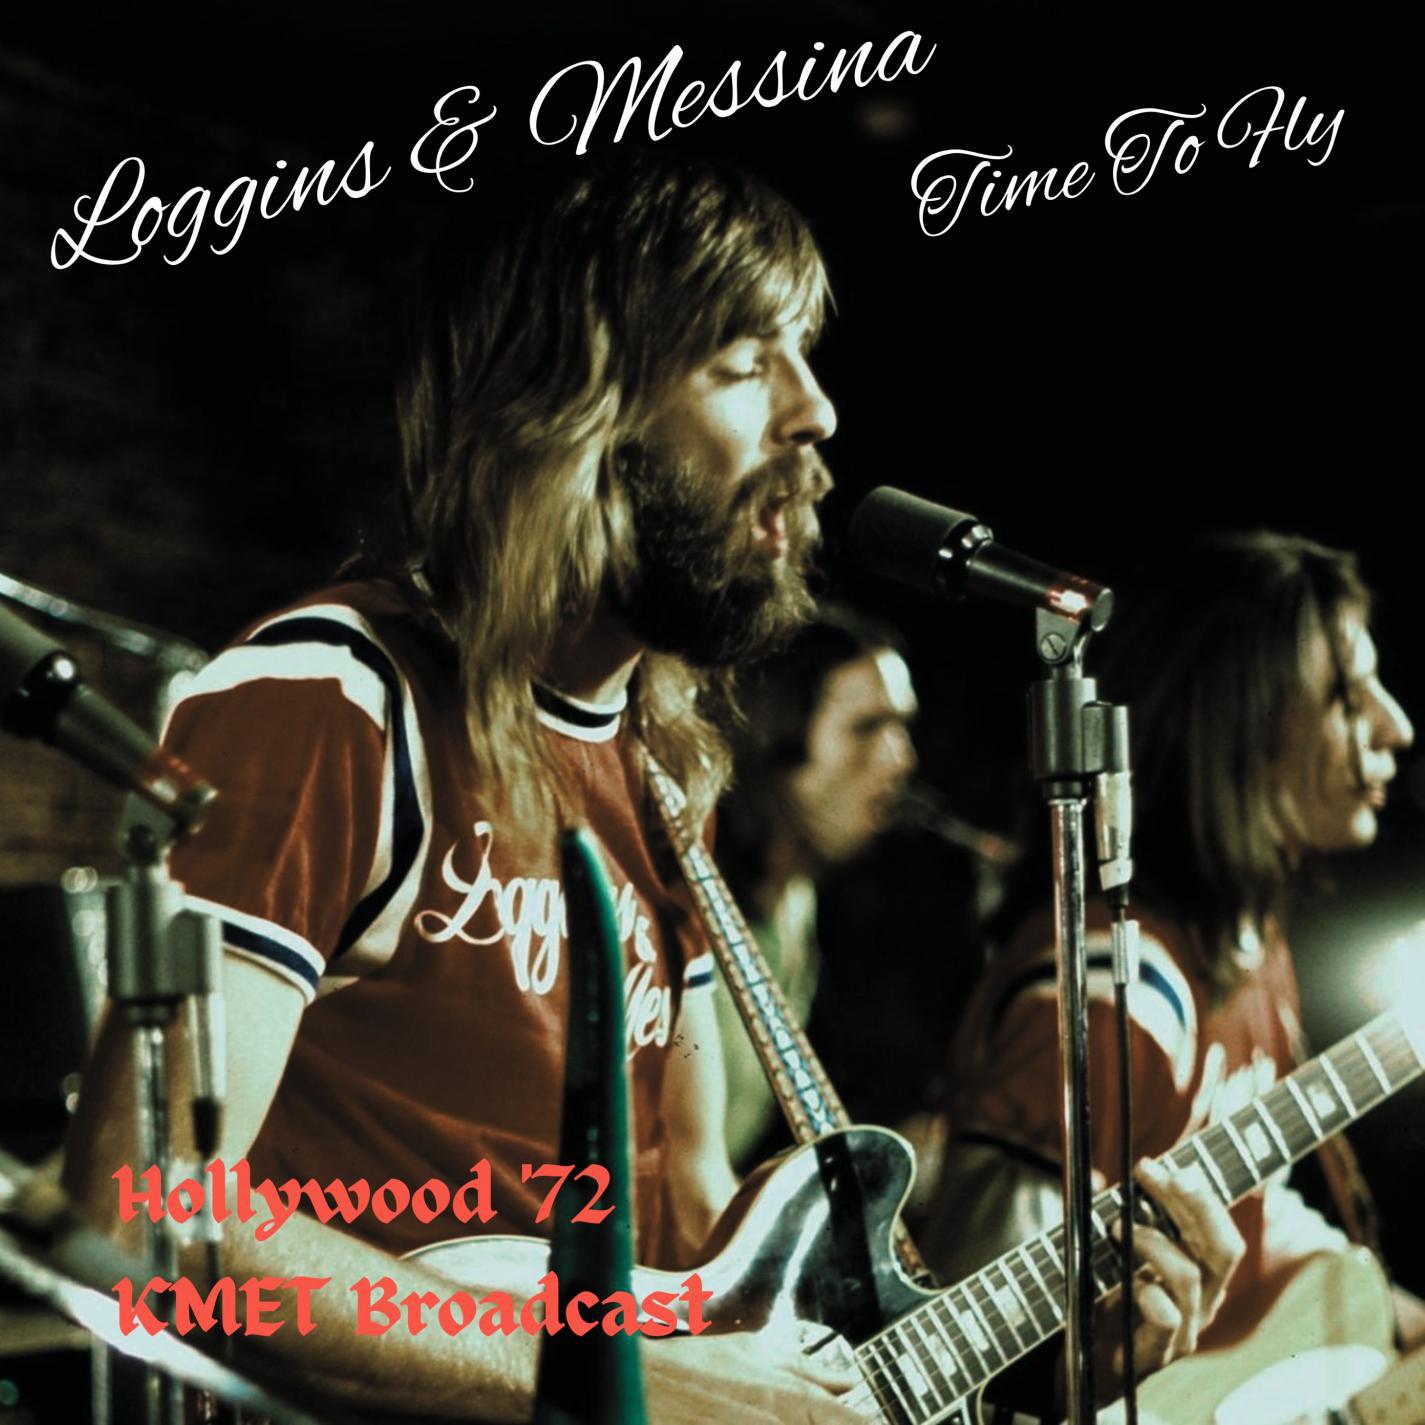 Loggins & Messina - Long Tail Cat (Live)